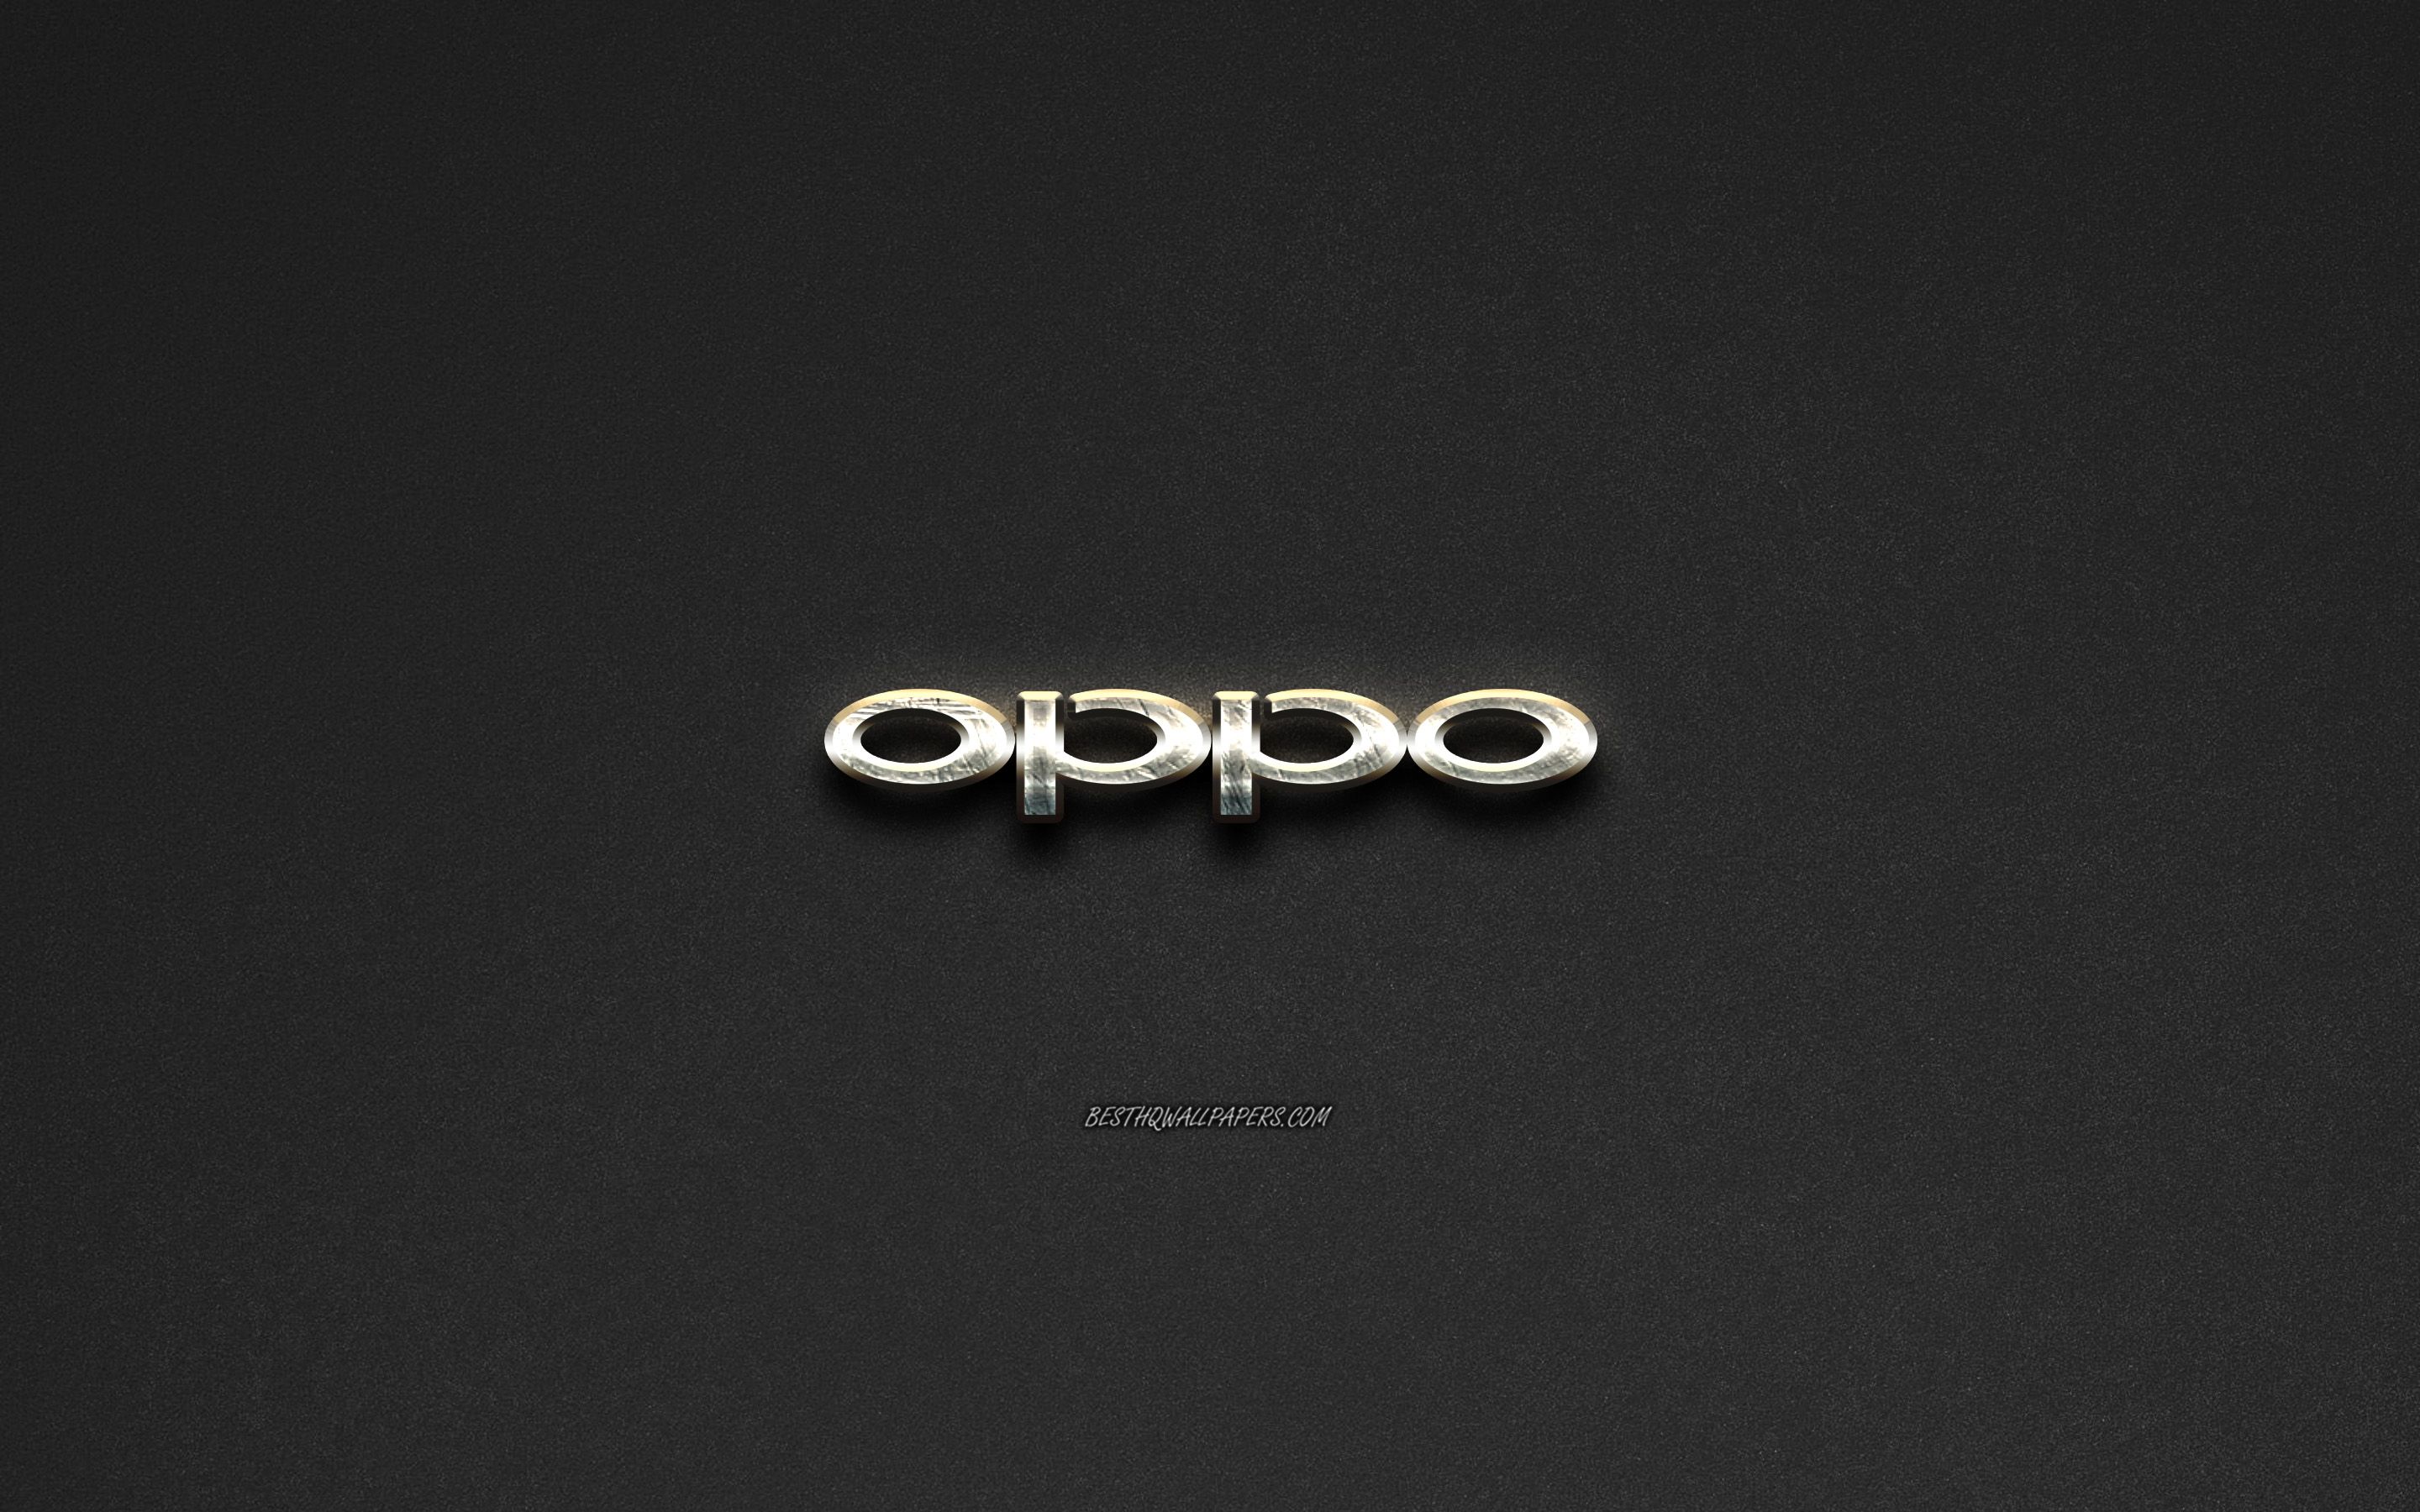 Oppo Logo Hd Wallpaper Download - Fepitchon